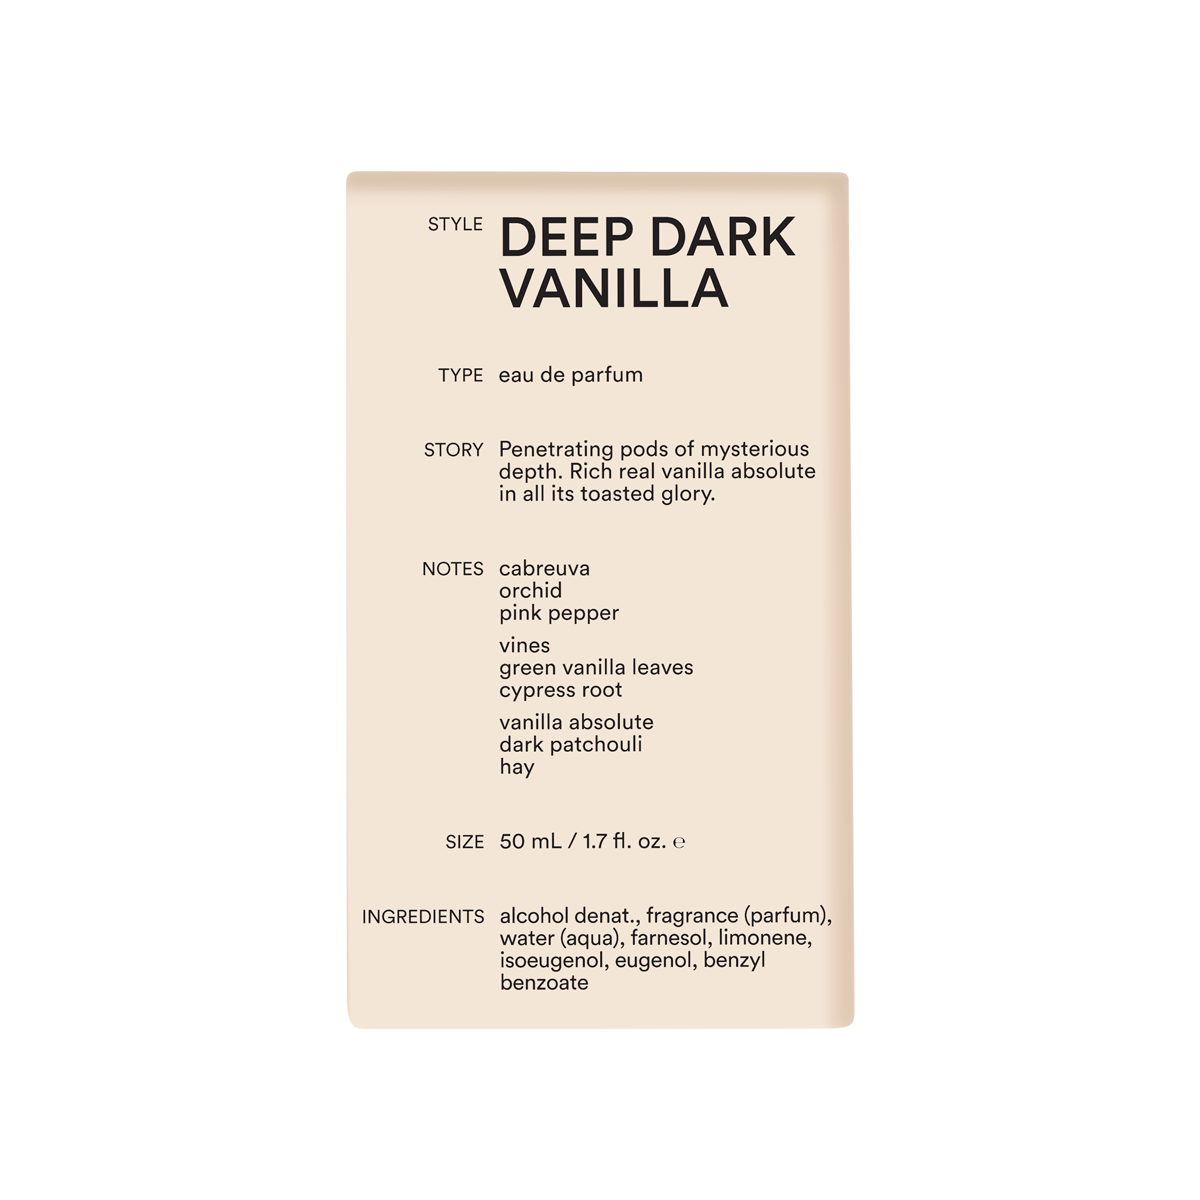 D.S. & DURGA - Deep Dark Vanilla Eau de Parfum